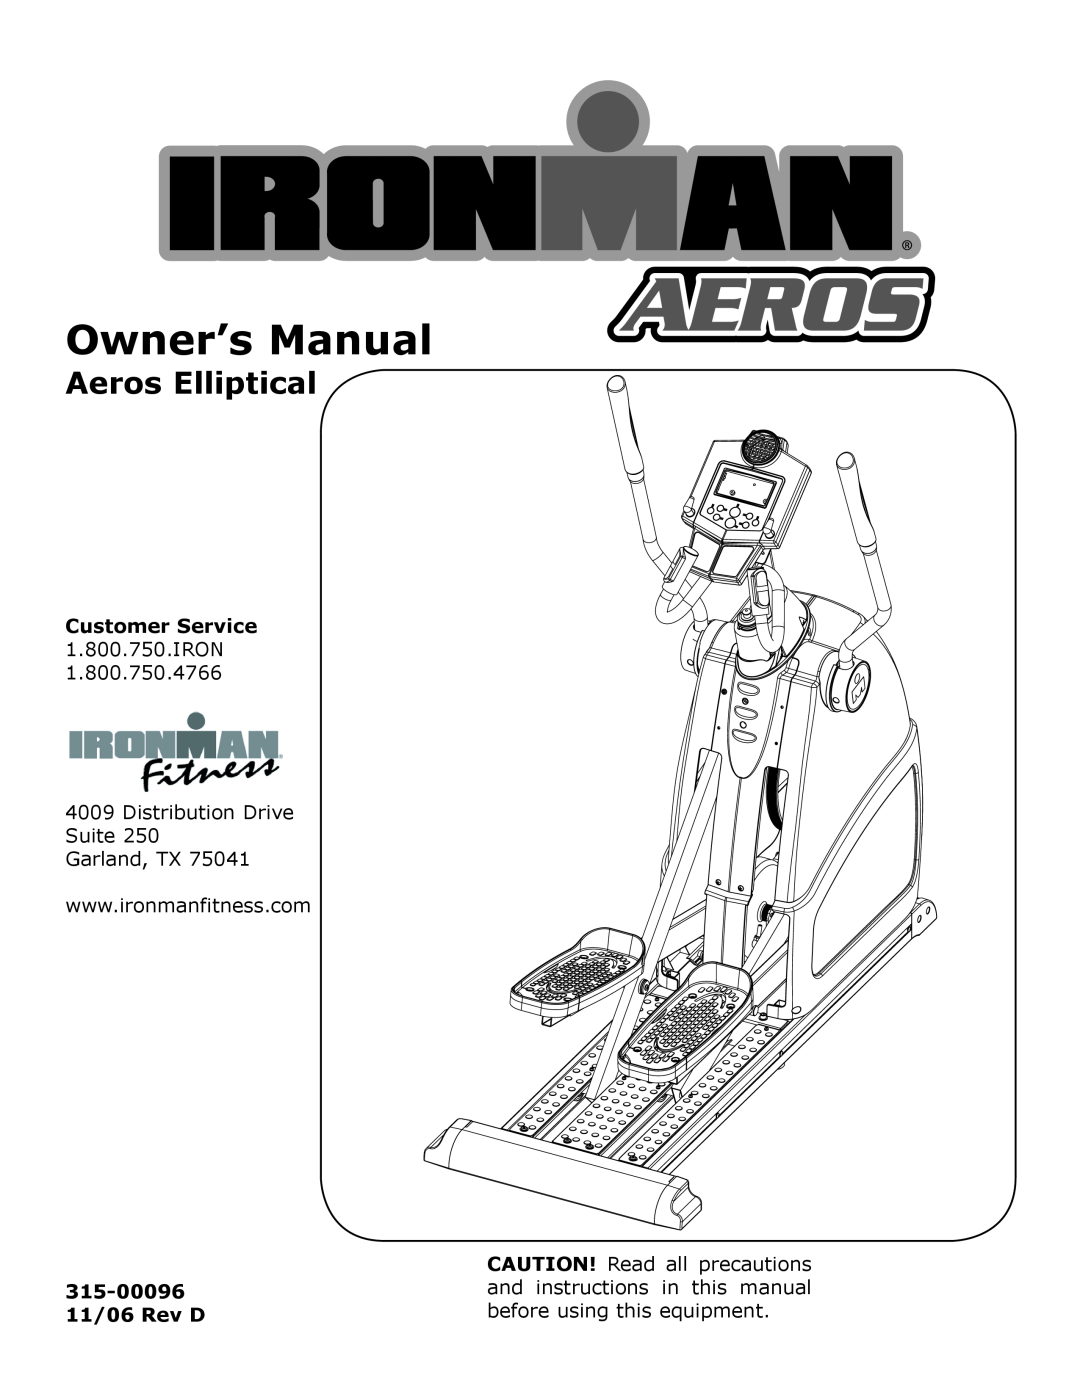 Ironman Fitness owner manual Aeros Elliptical, Owner’s Manual, Customer Service 1.800.750.IRON, 315-00096 11/06 Rev D 